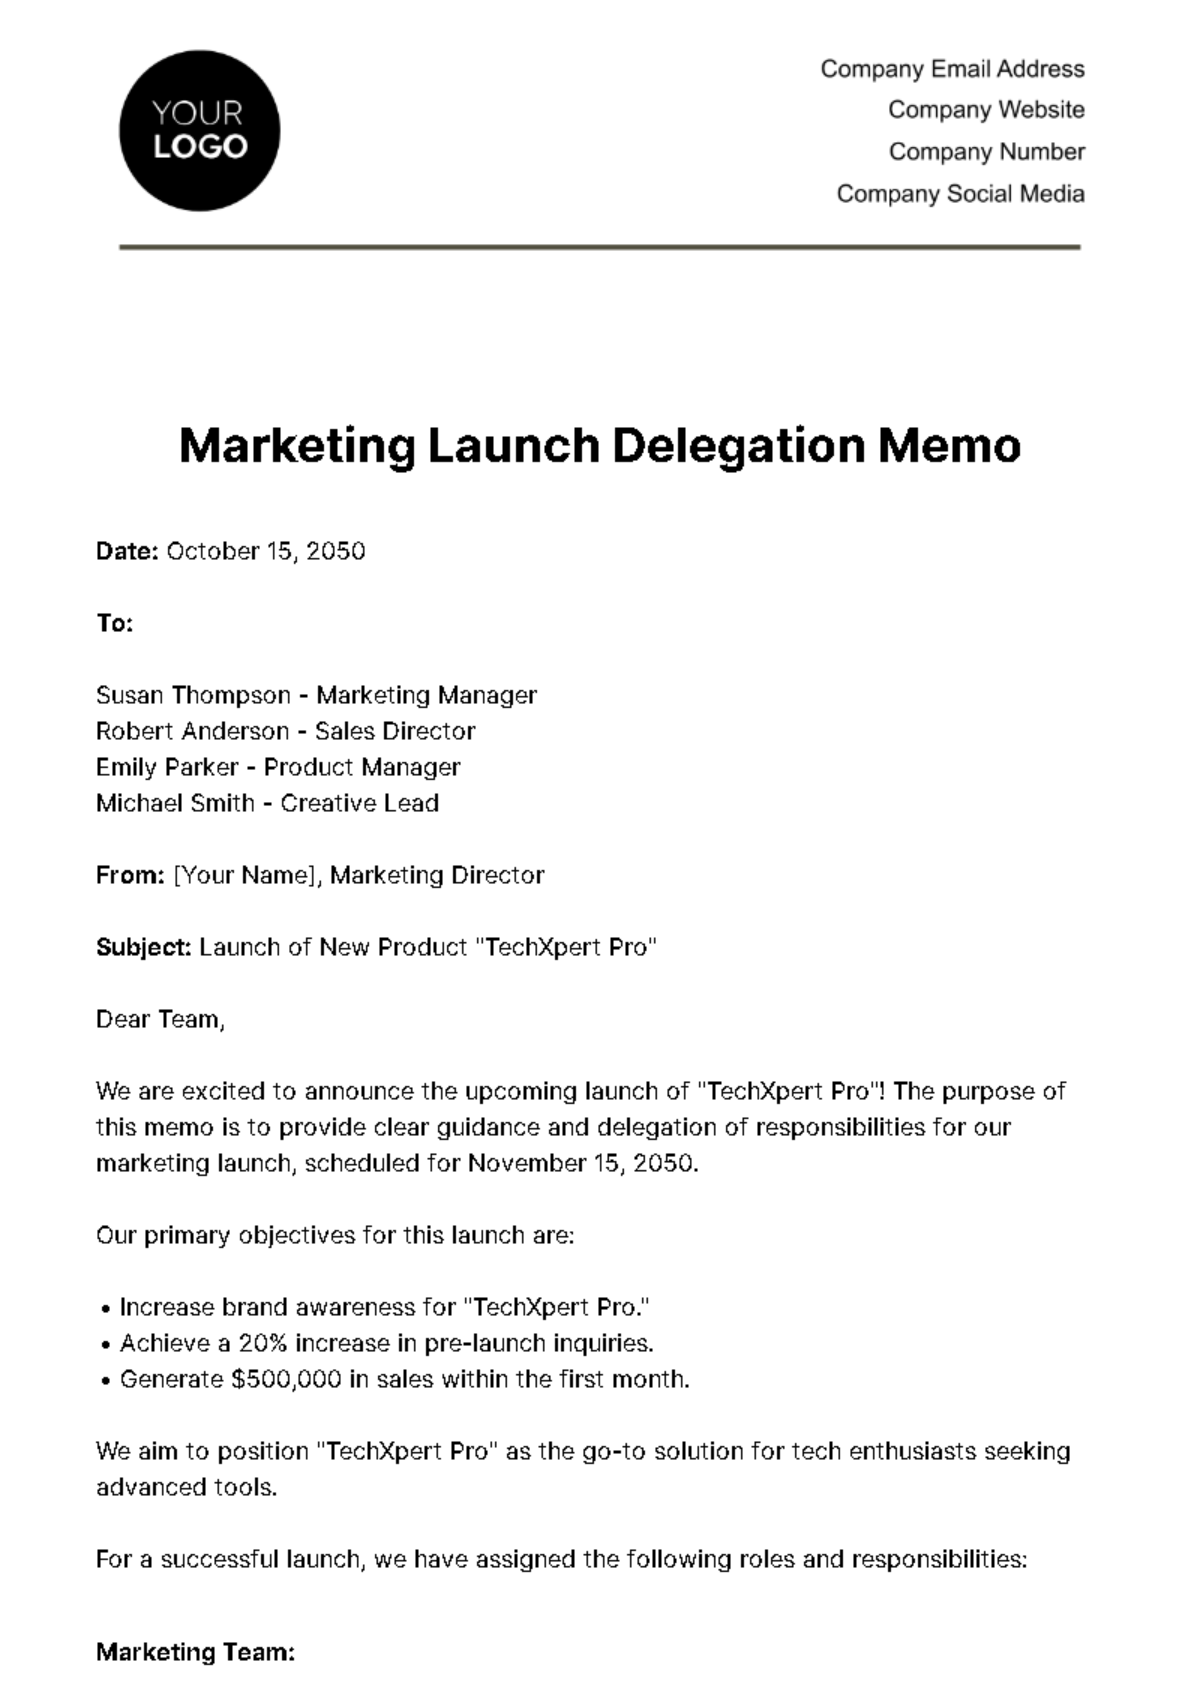 Marketing Launch Delegation Memo Template